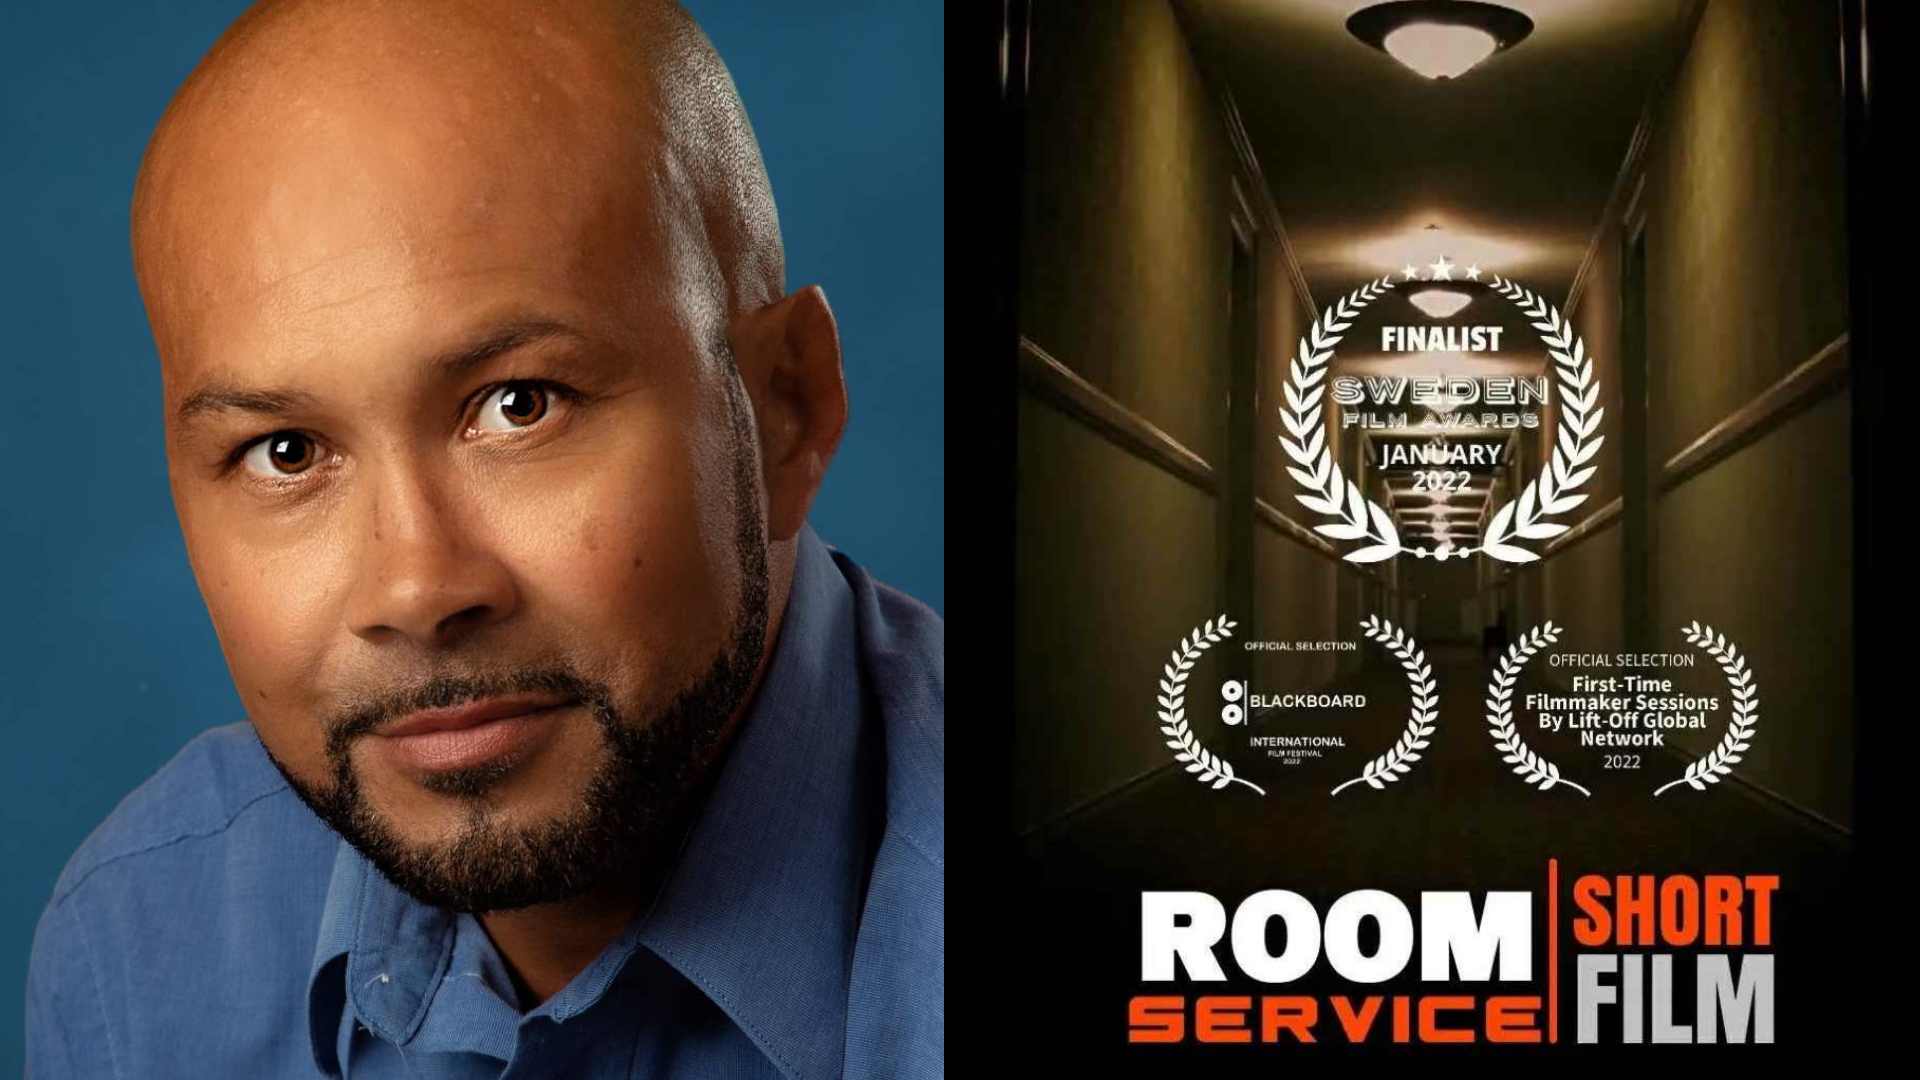 Hollywood News & Talent: Actor Tony Jones starring in Award-Winning film ‘Room Service’!